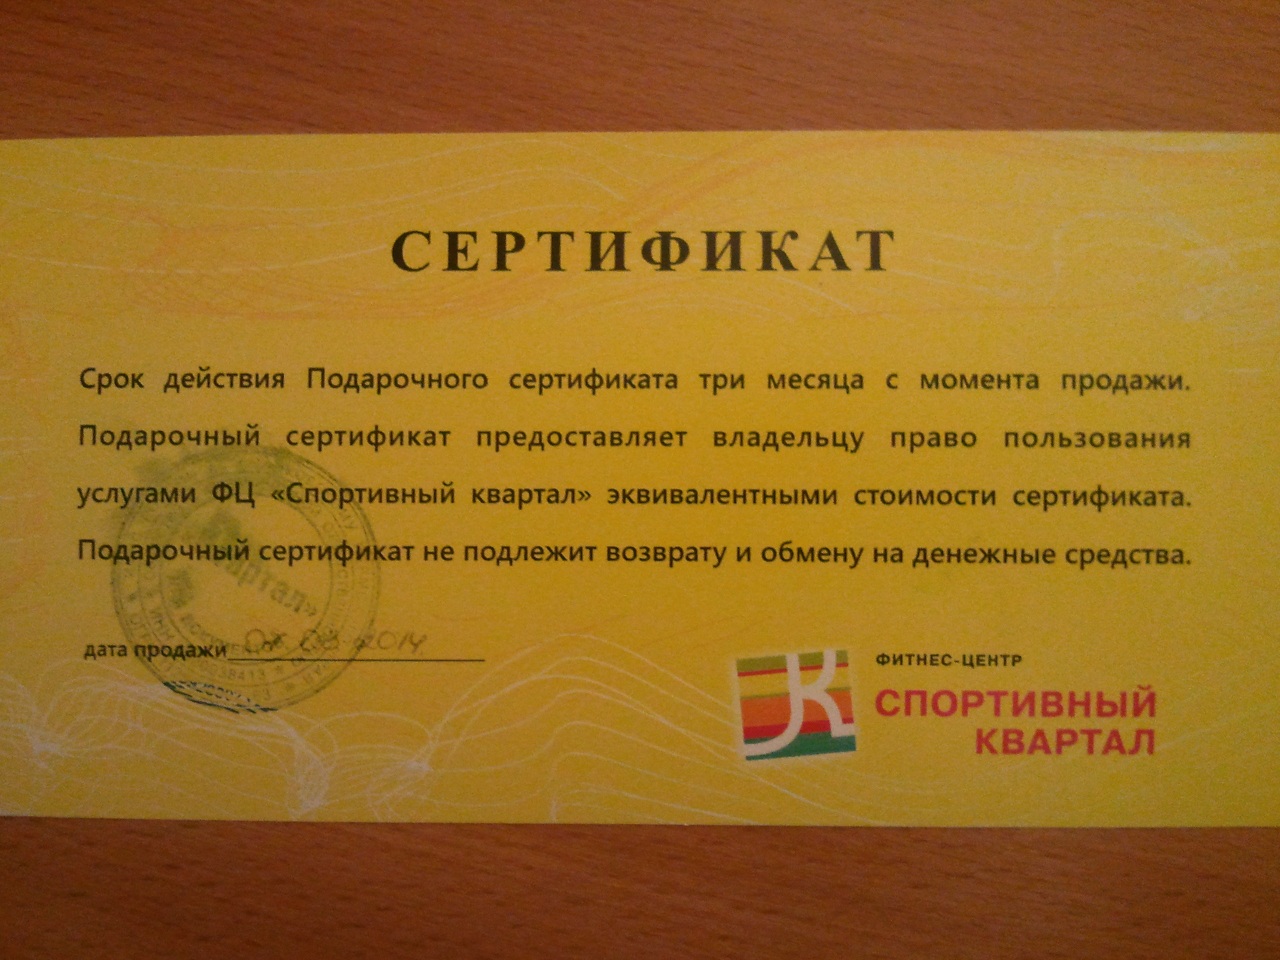 Letu ru сертификат срок действия. Срок действия подарочного сертификата. Подарочный сертификат рок. Подарочный сертификат спортивный. Срок годности подарочного сертификата.